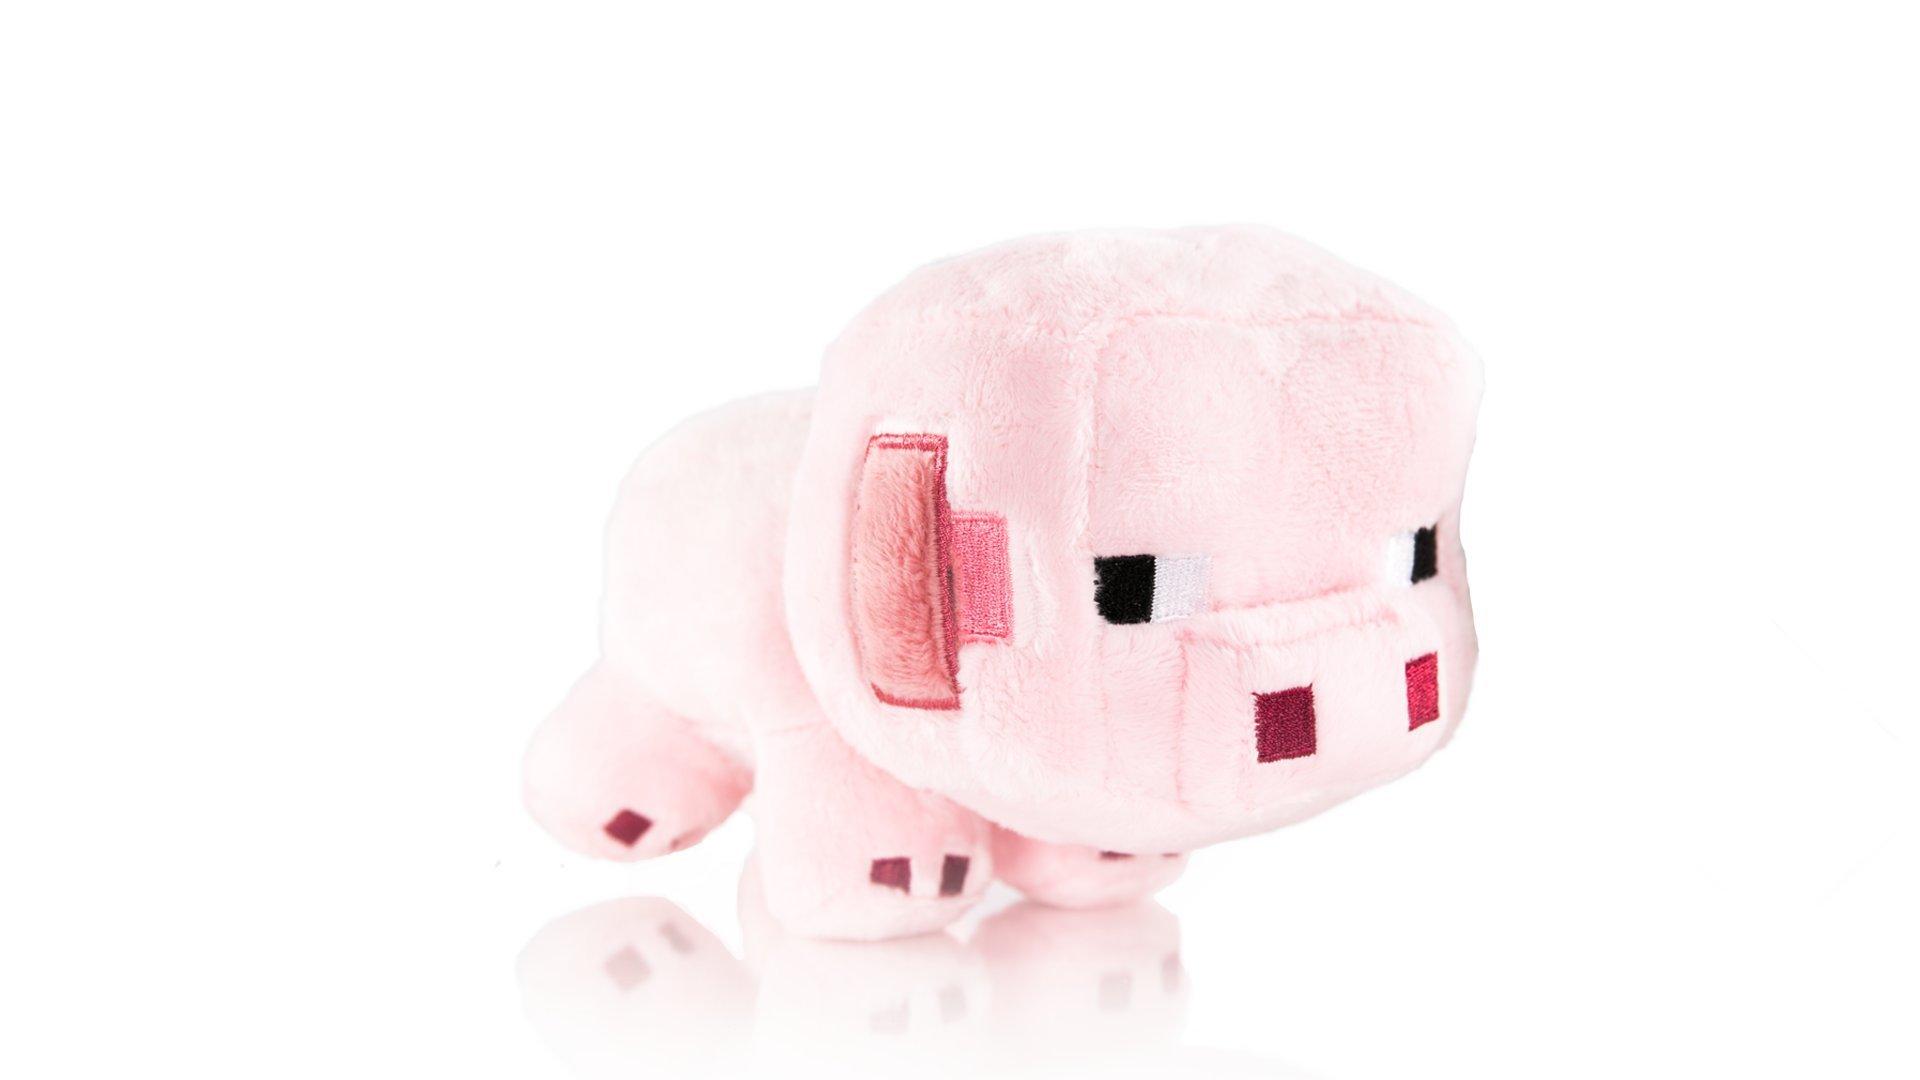 minecraft baby pig plush